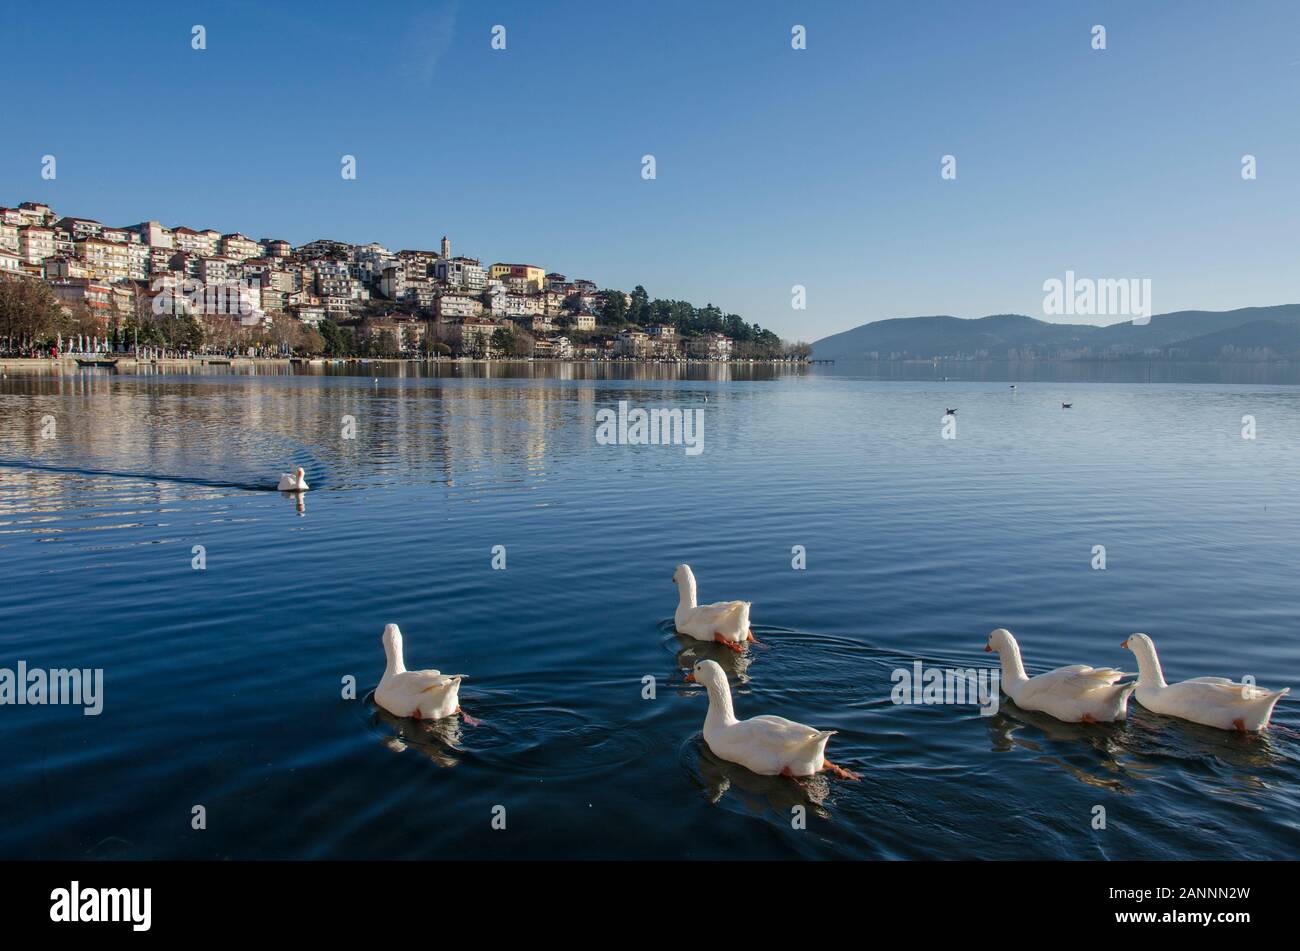 Kastoria City, Griechenland - Ducks in Lake Orestiada - Kostur City, Mazedonien Stockfoto